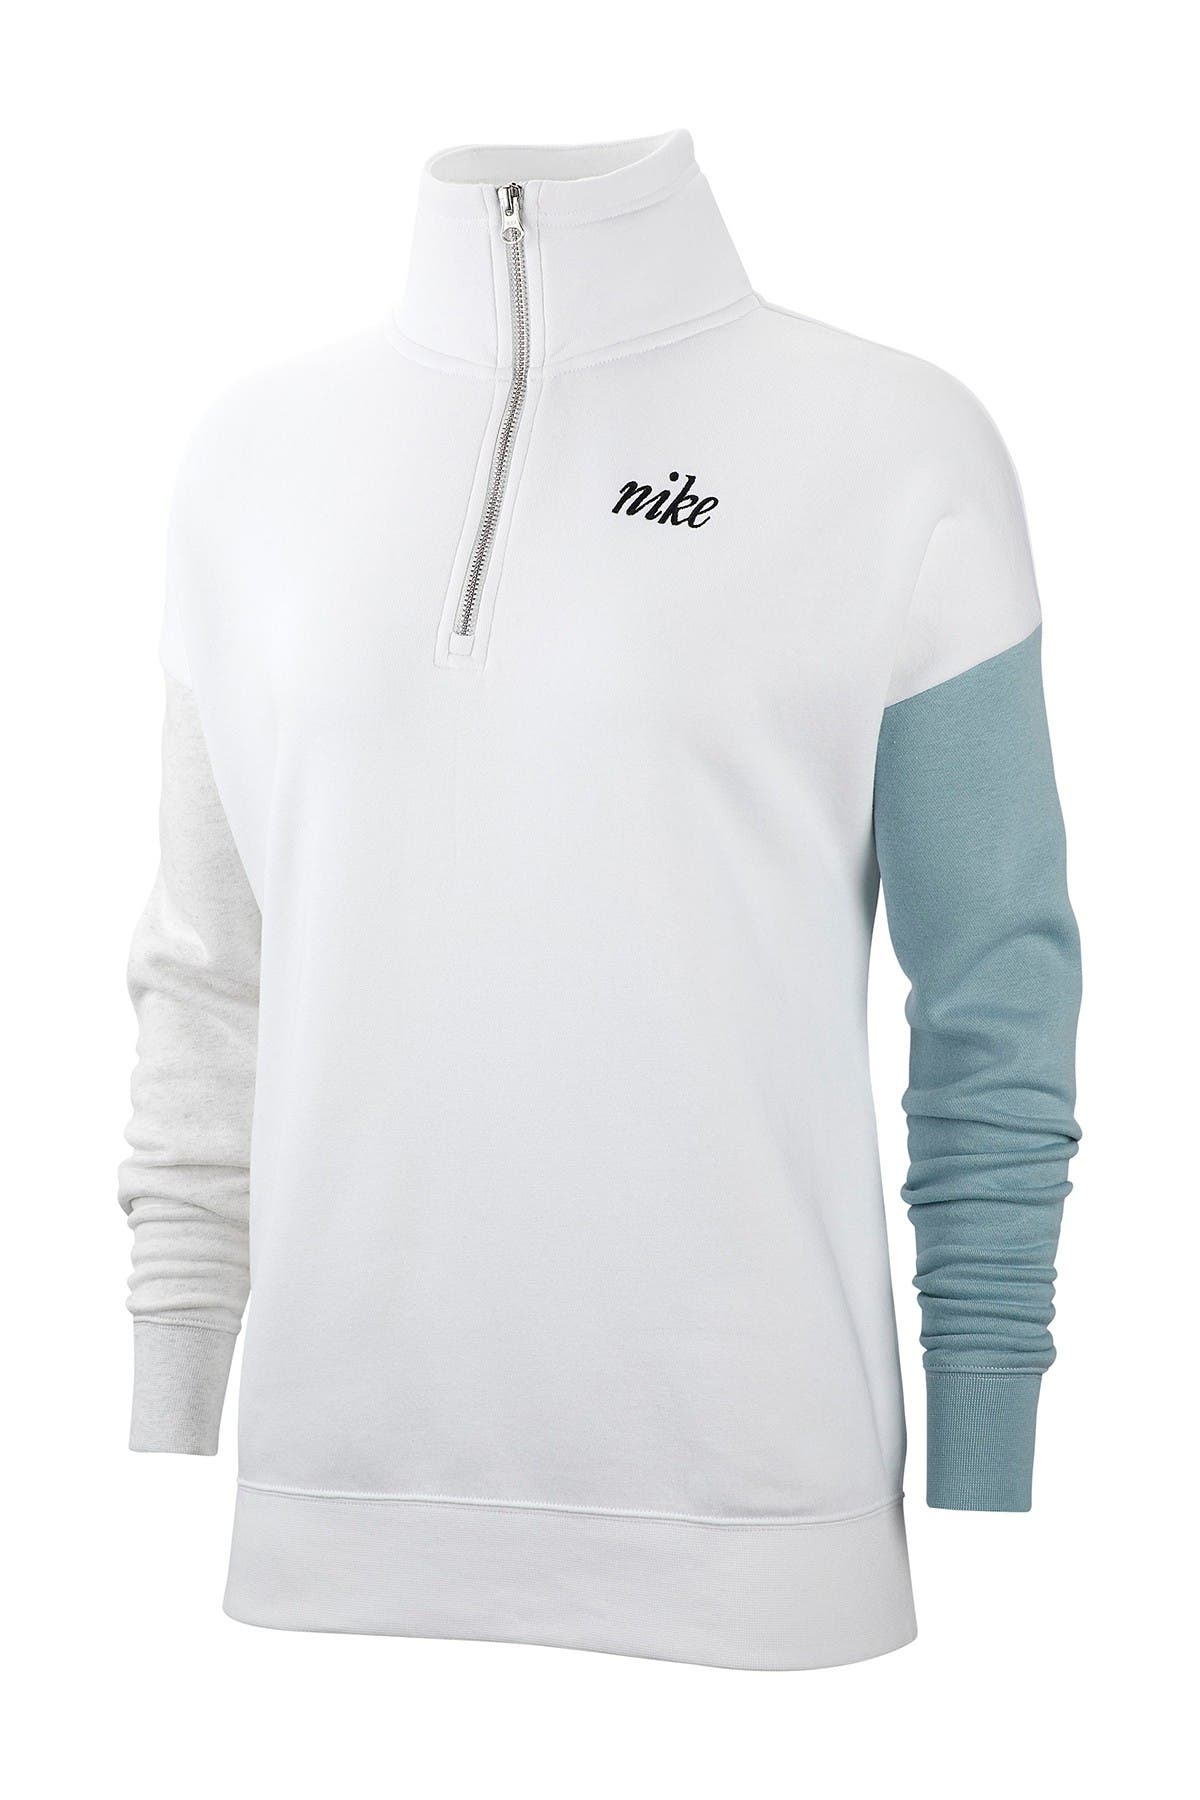 Nike | Colorblock 1/4 Zip Pullover 